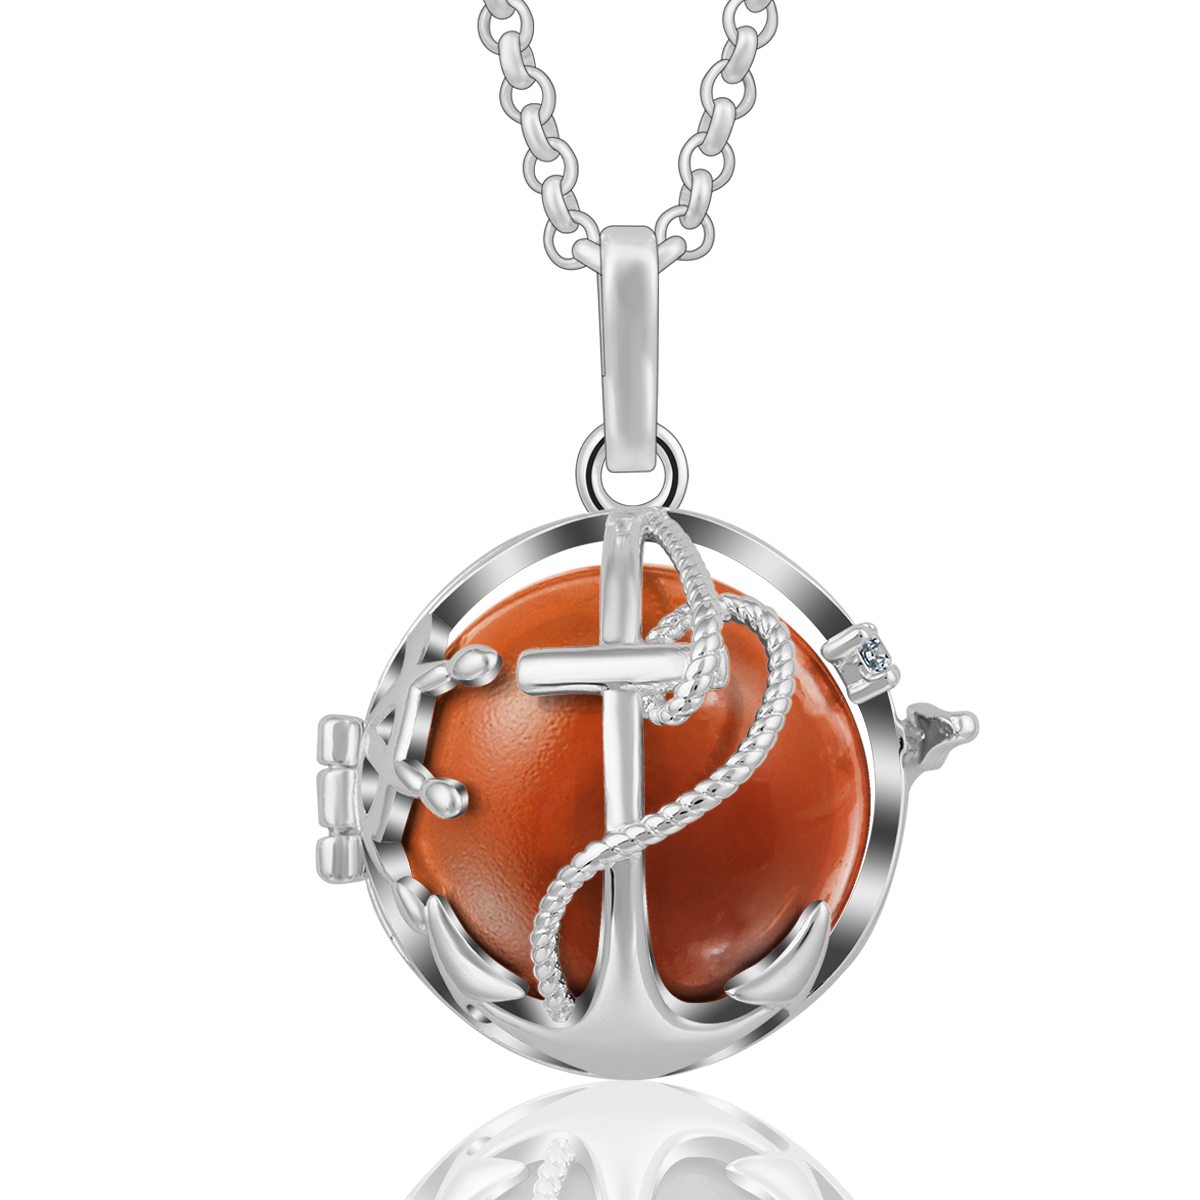 Merryshine Wholesale maternity bola ball necklace pendants baby caller pendants for Pregnant women